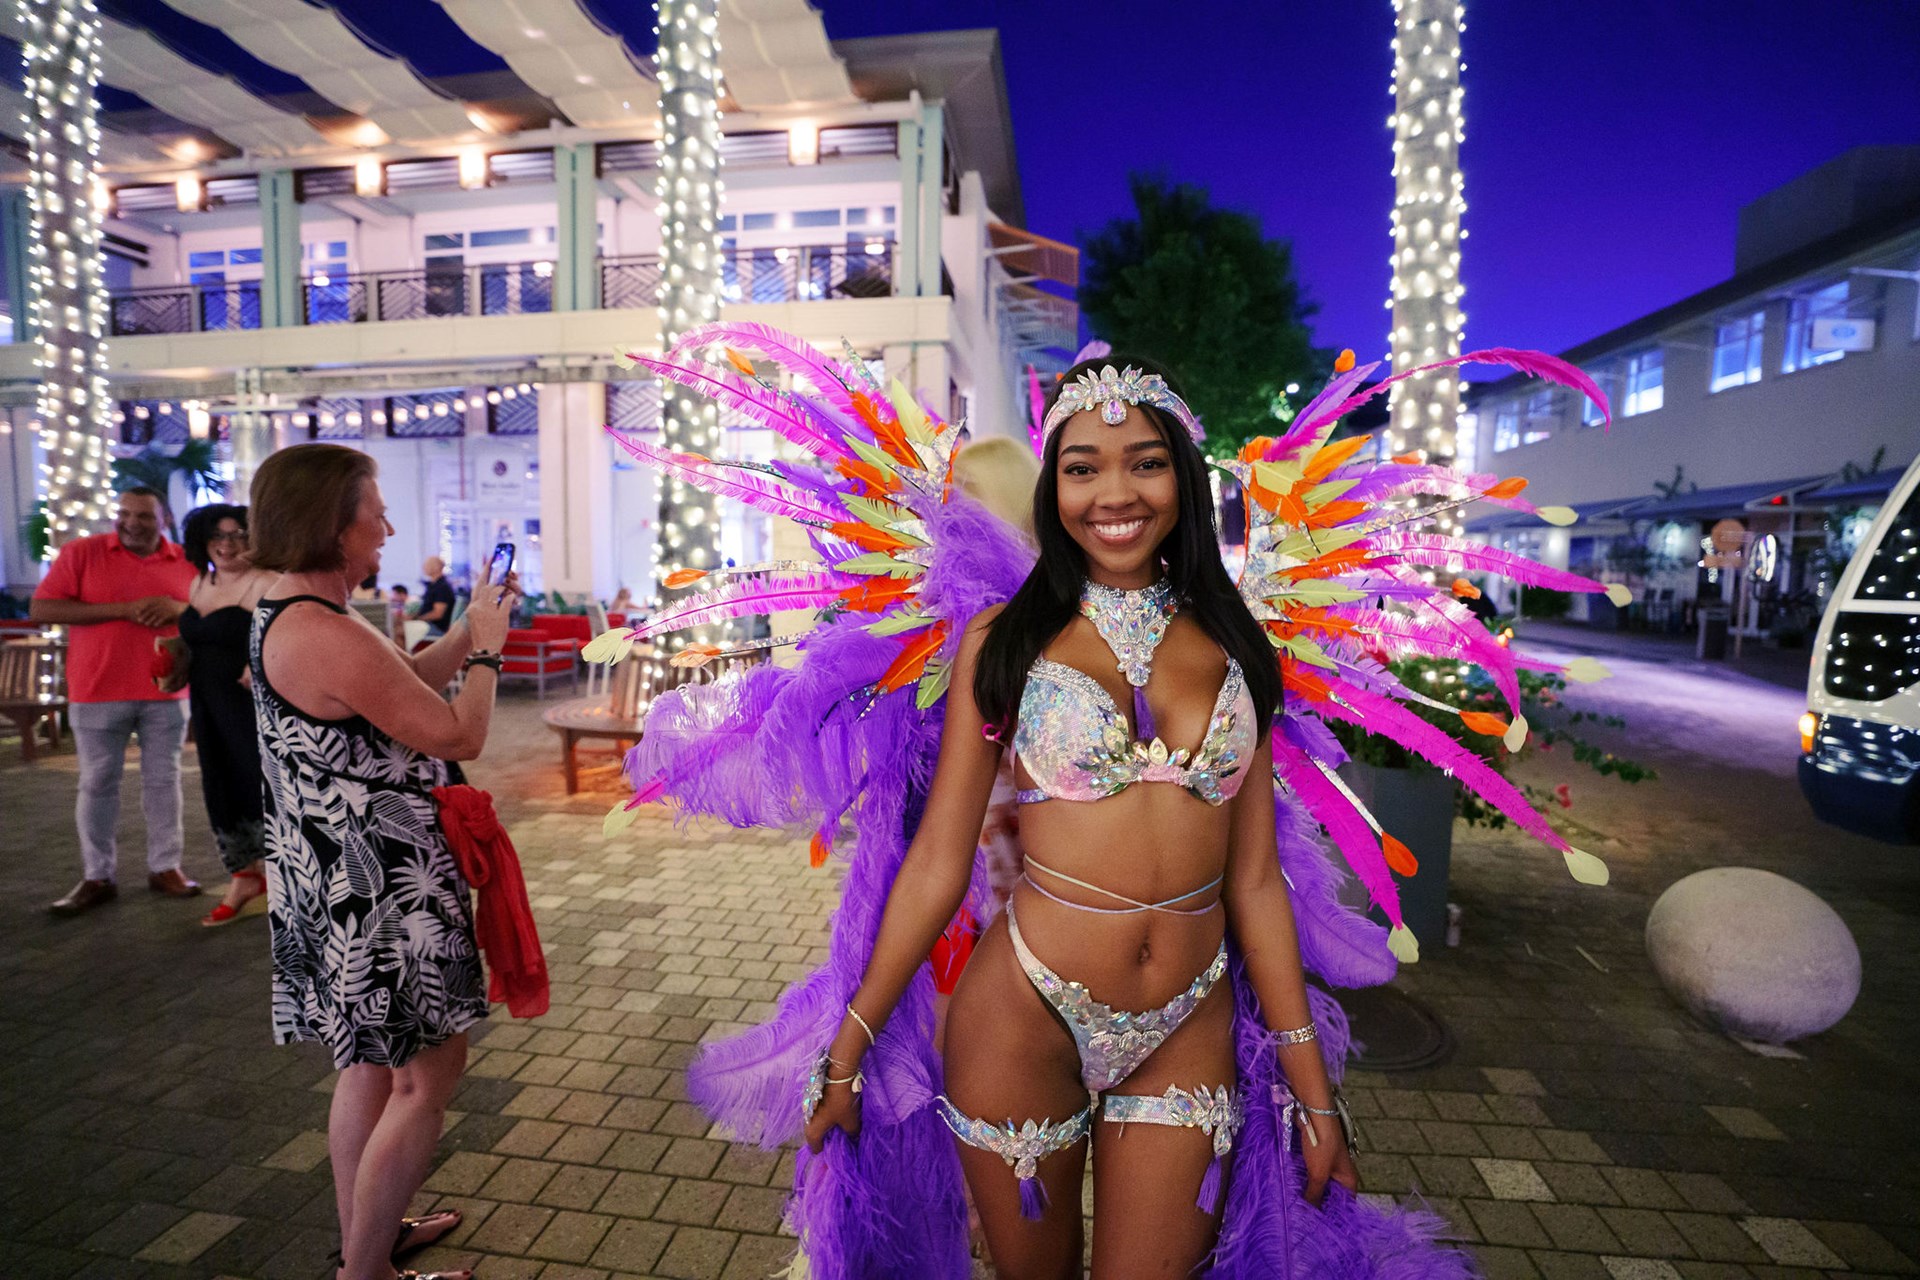 Carnival culture coming to Camana Bay